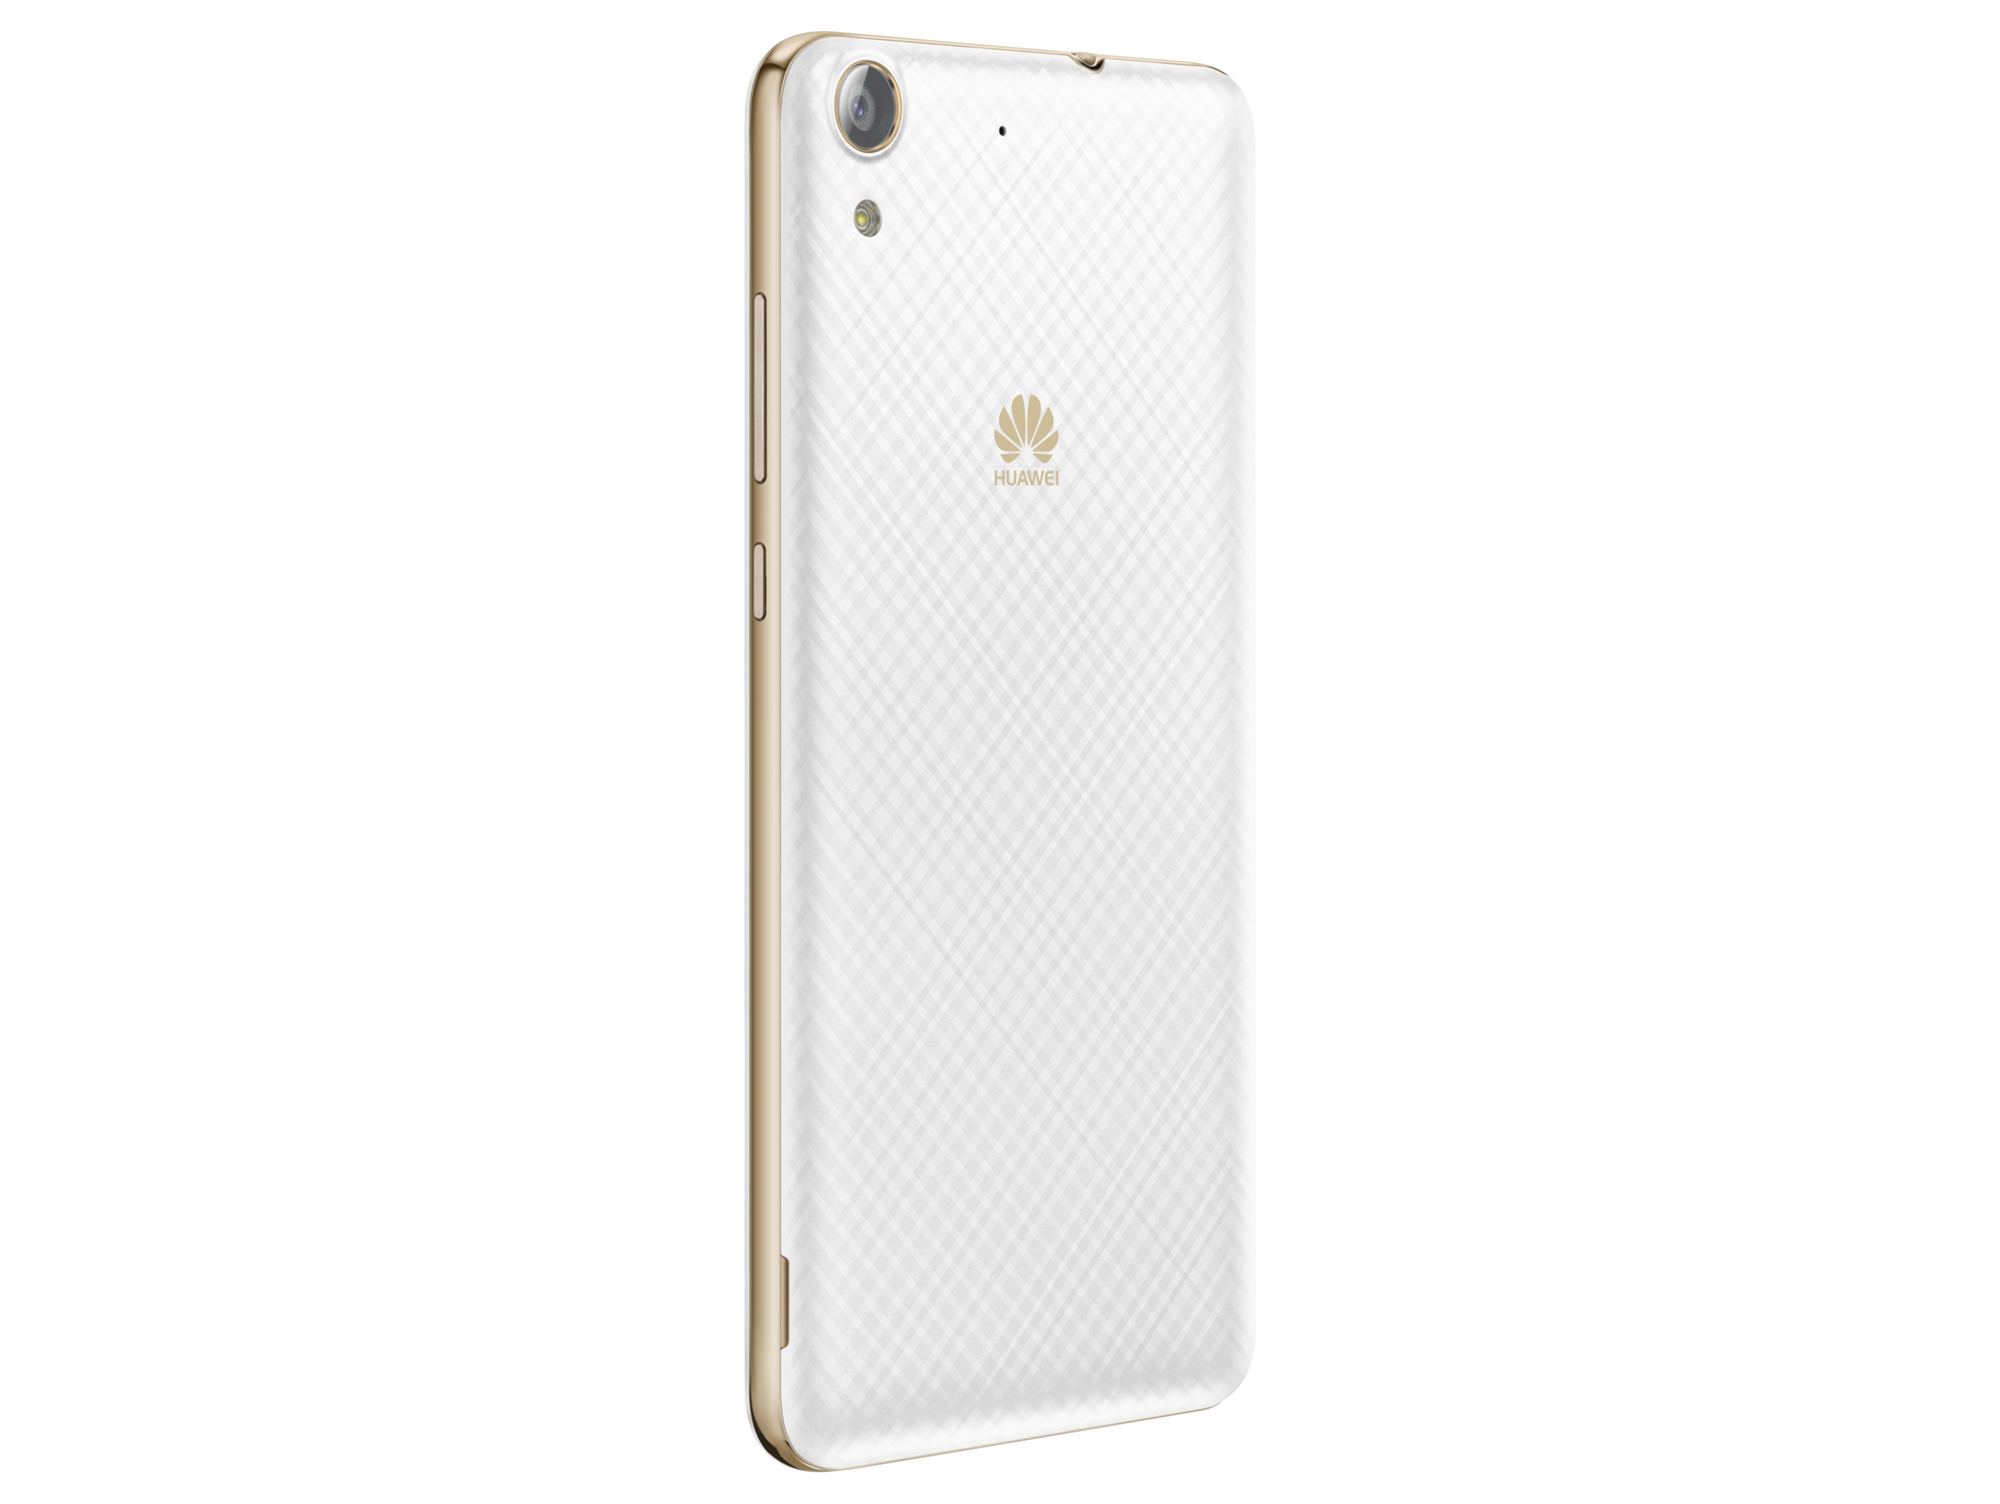 Rezumar triunfante vacío Smartphone HUAWEI Y6 II 5.5'' 16GB blanco